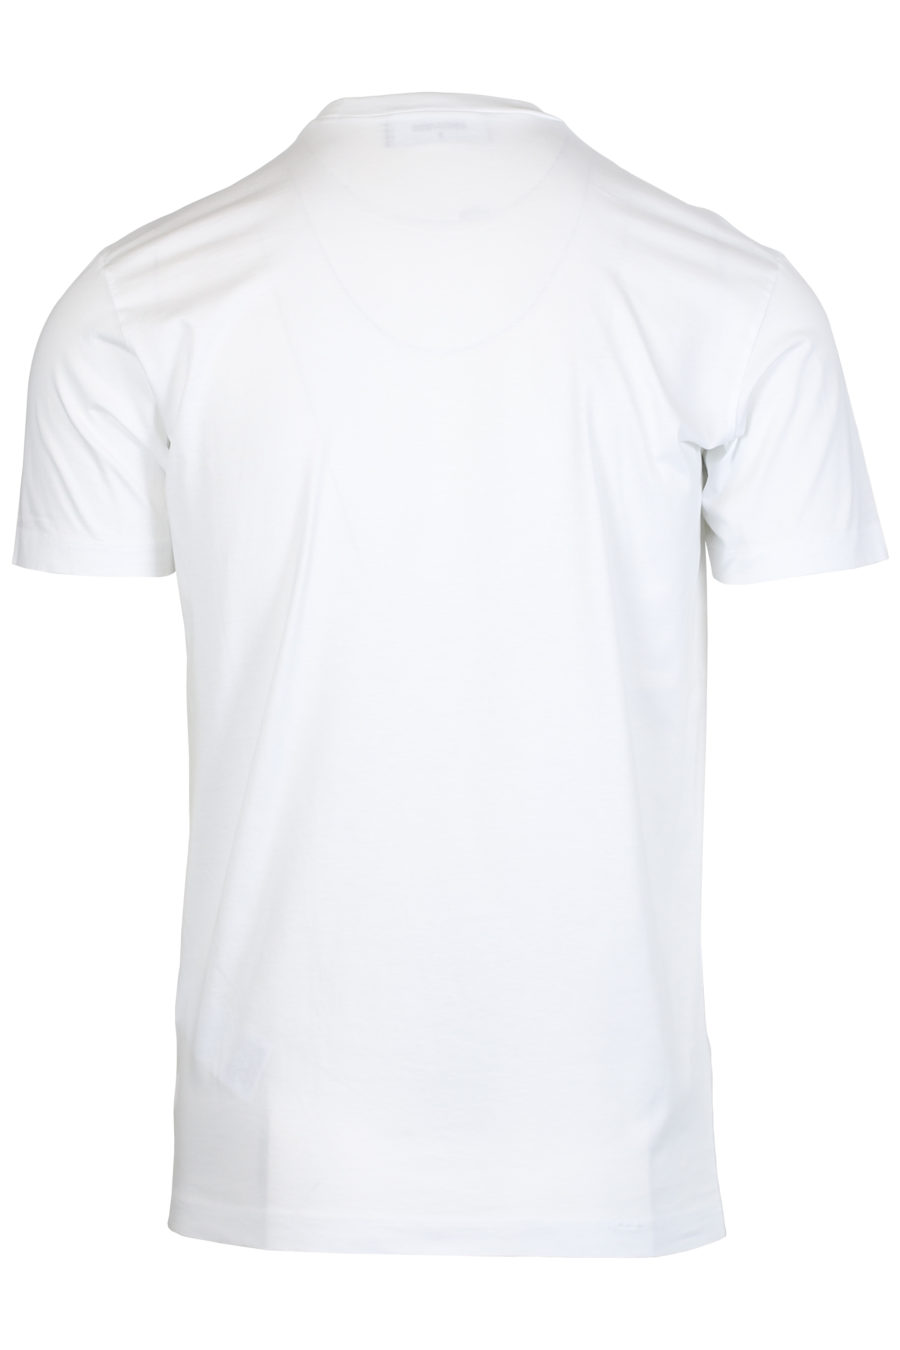 T-shirt branca com pequeno logótipo "Ceresio 9" - IMG 2433